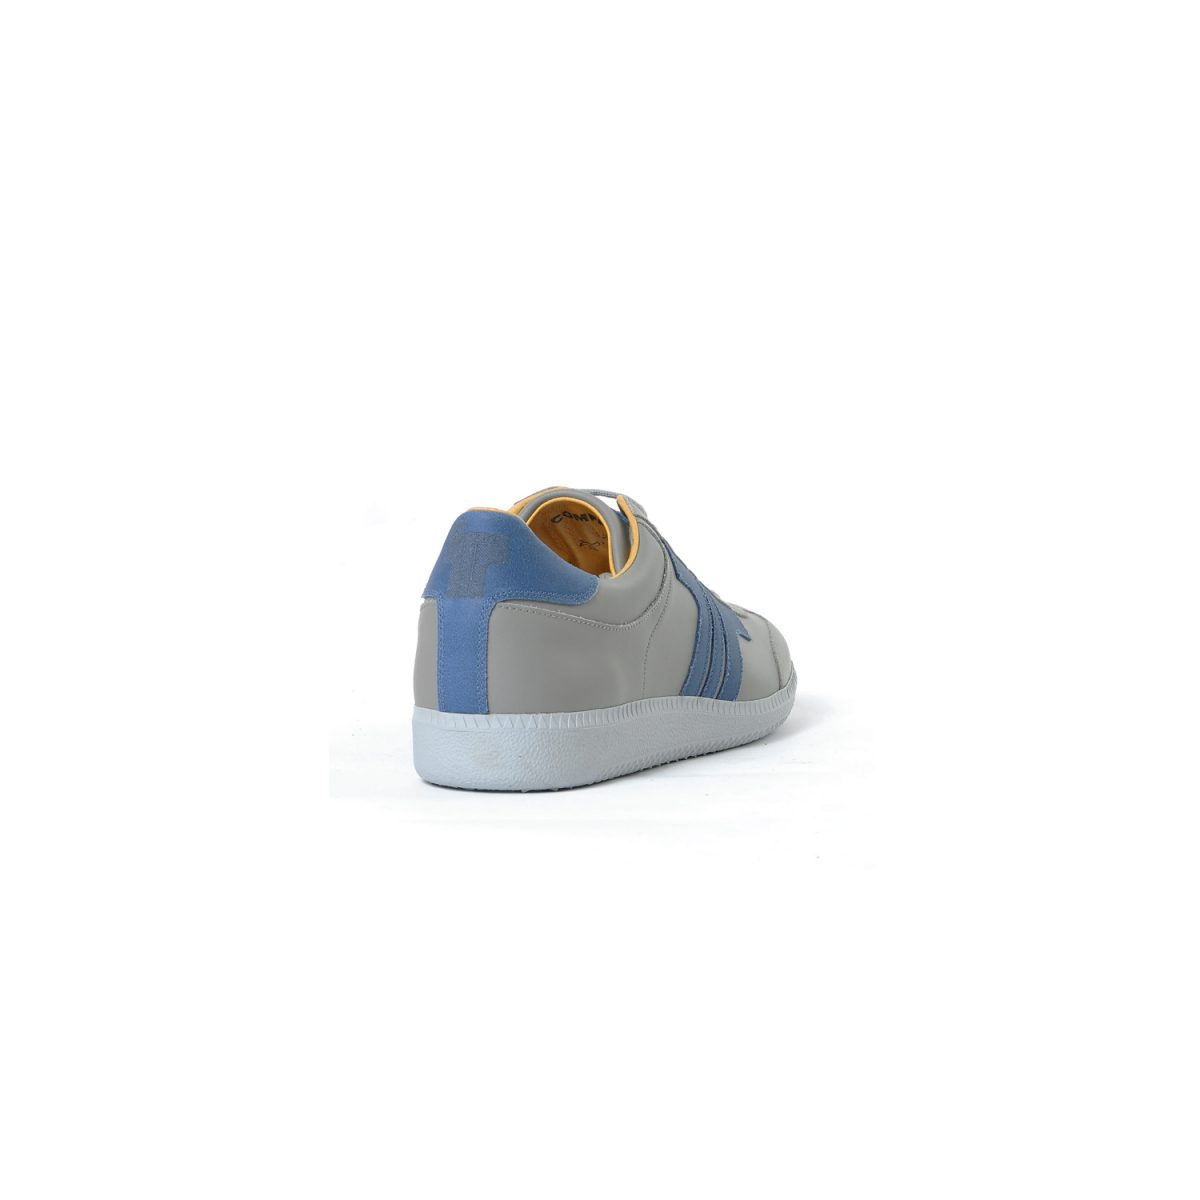 Tisza shoes - Compakt - Grey-blue